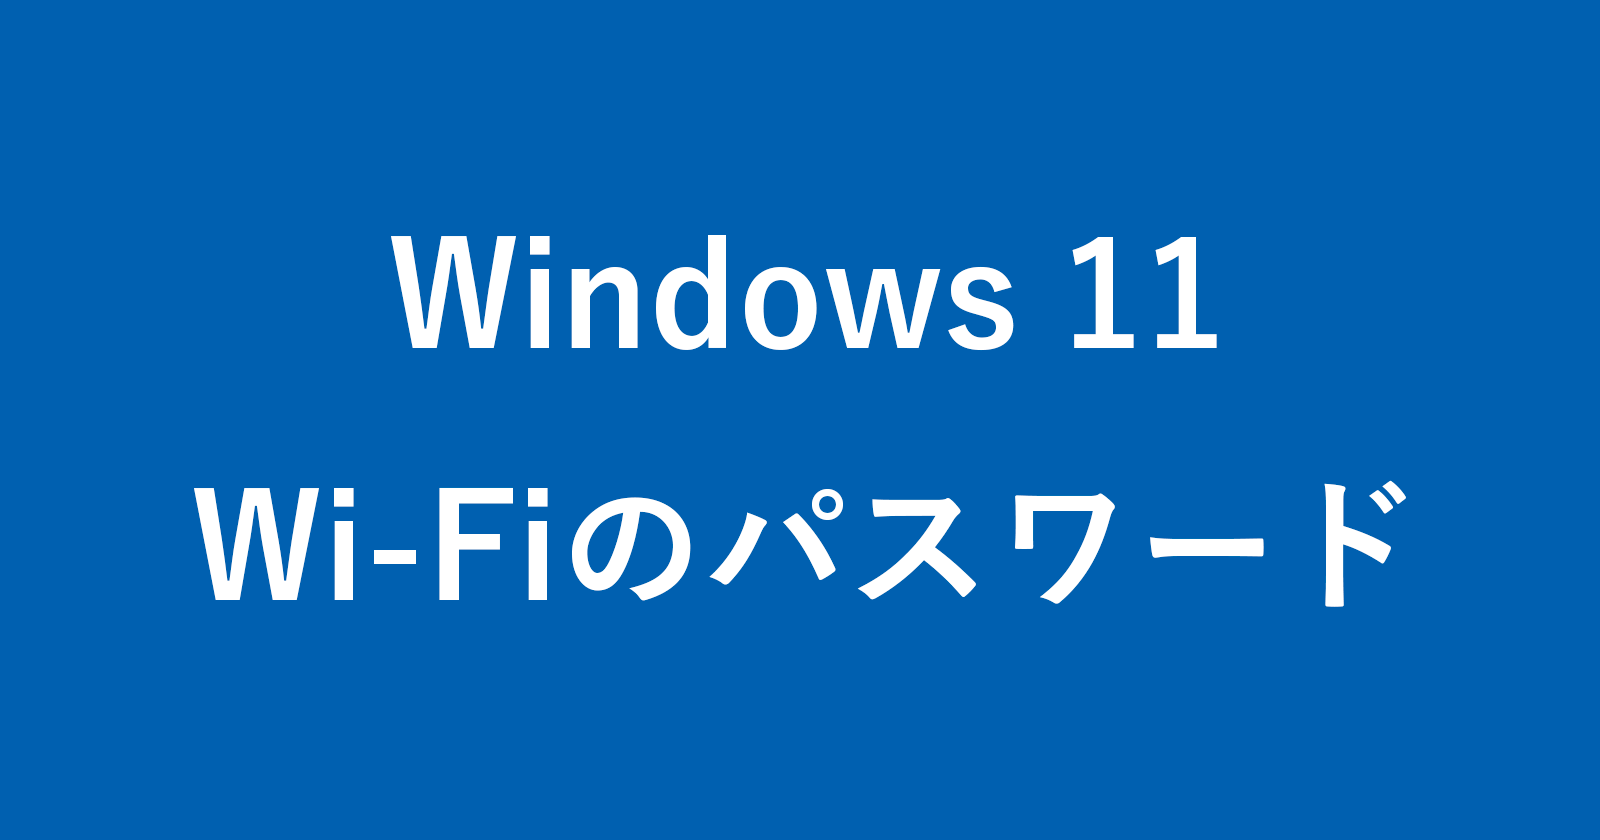 windows 11 wifi password